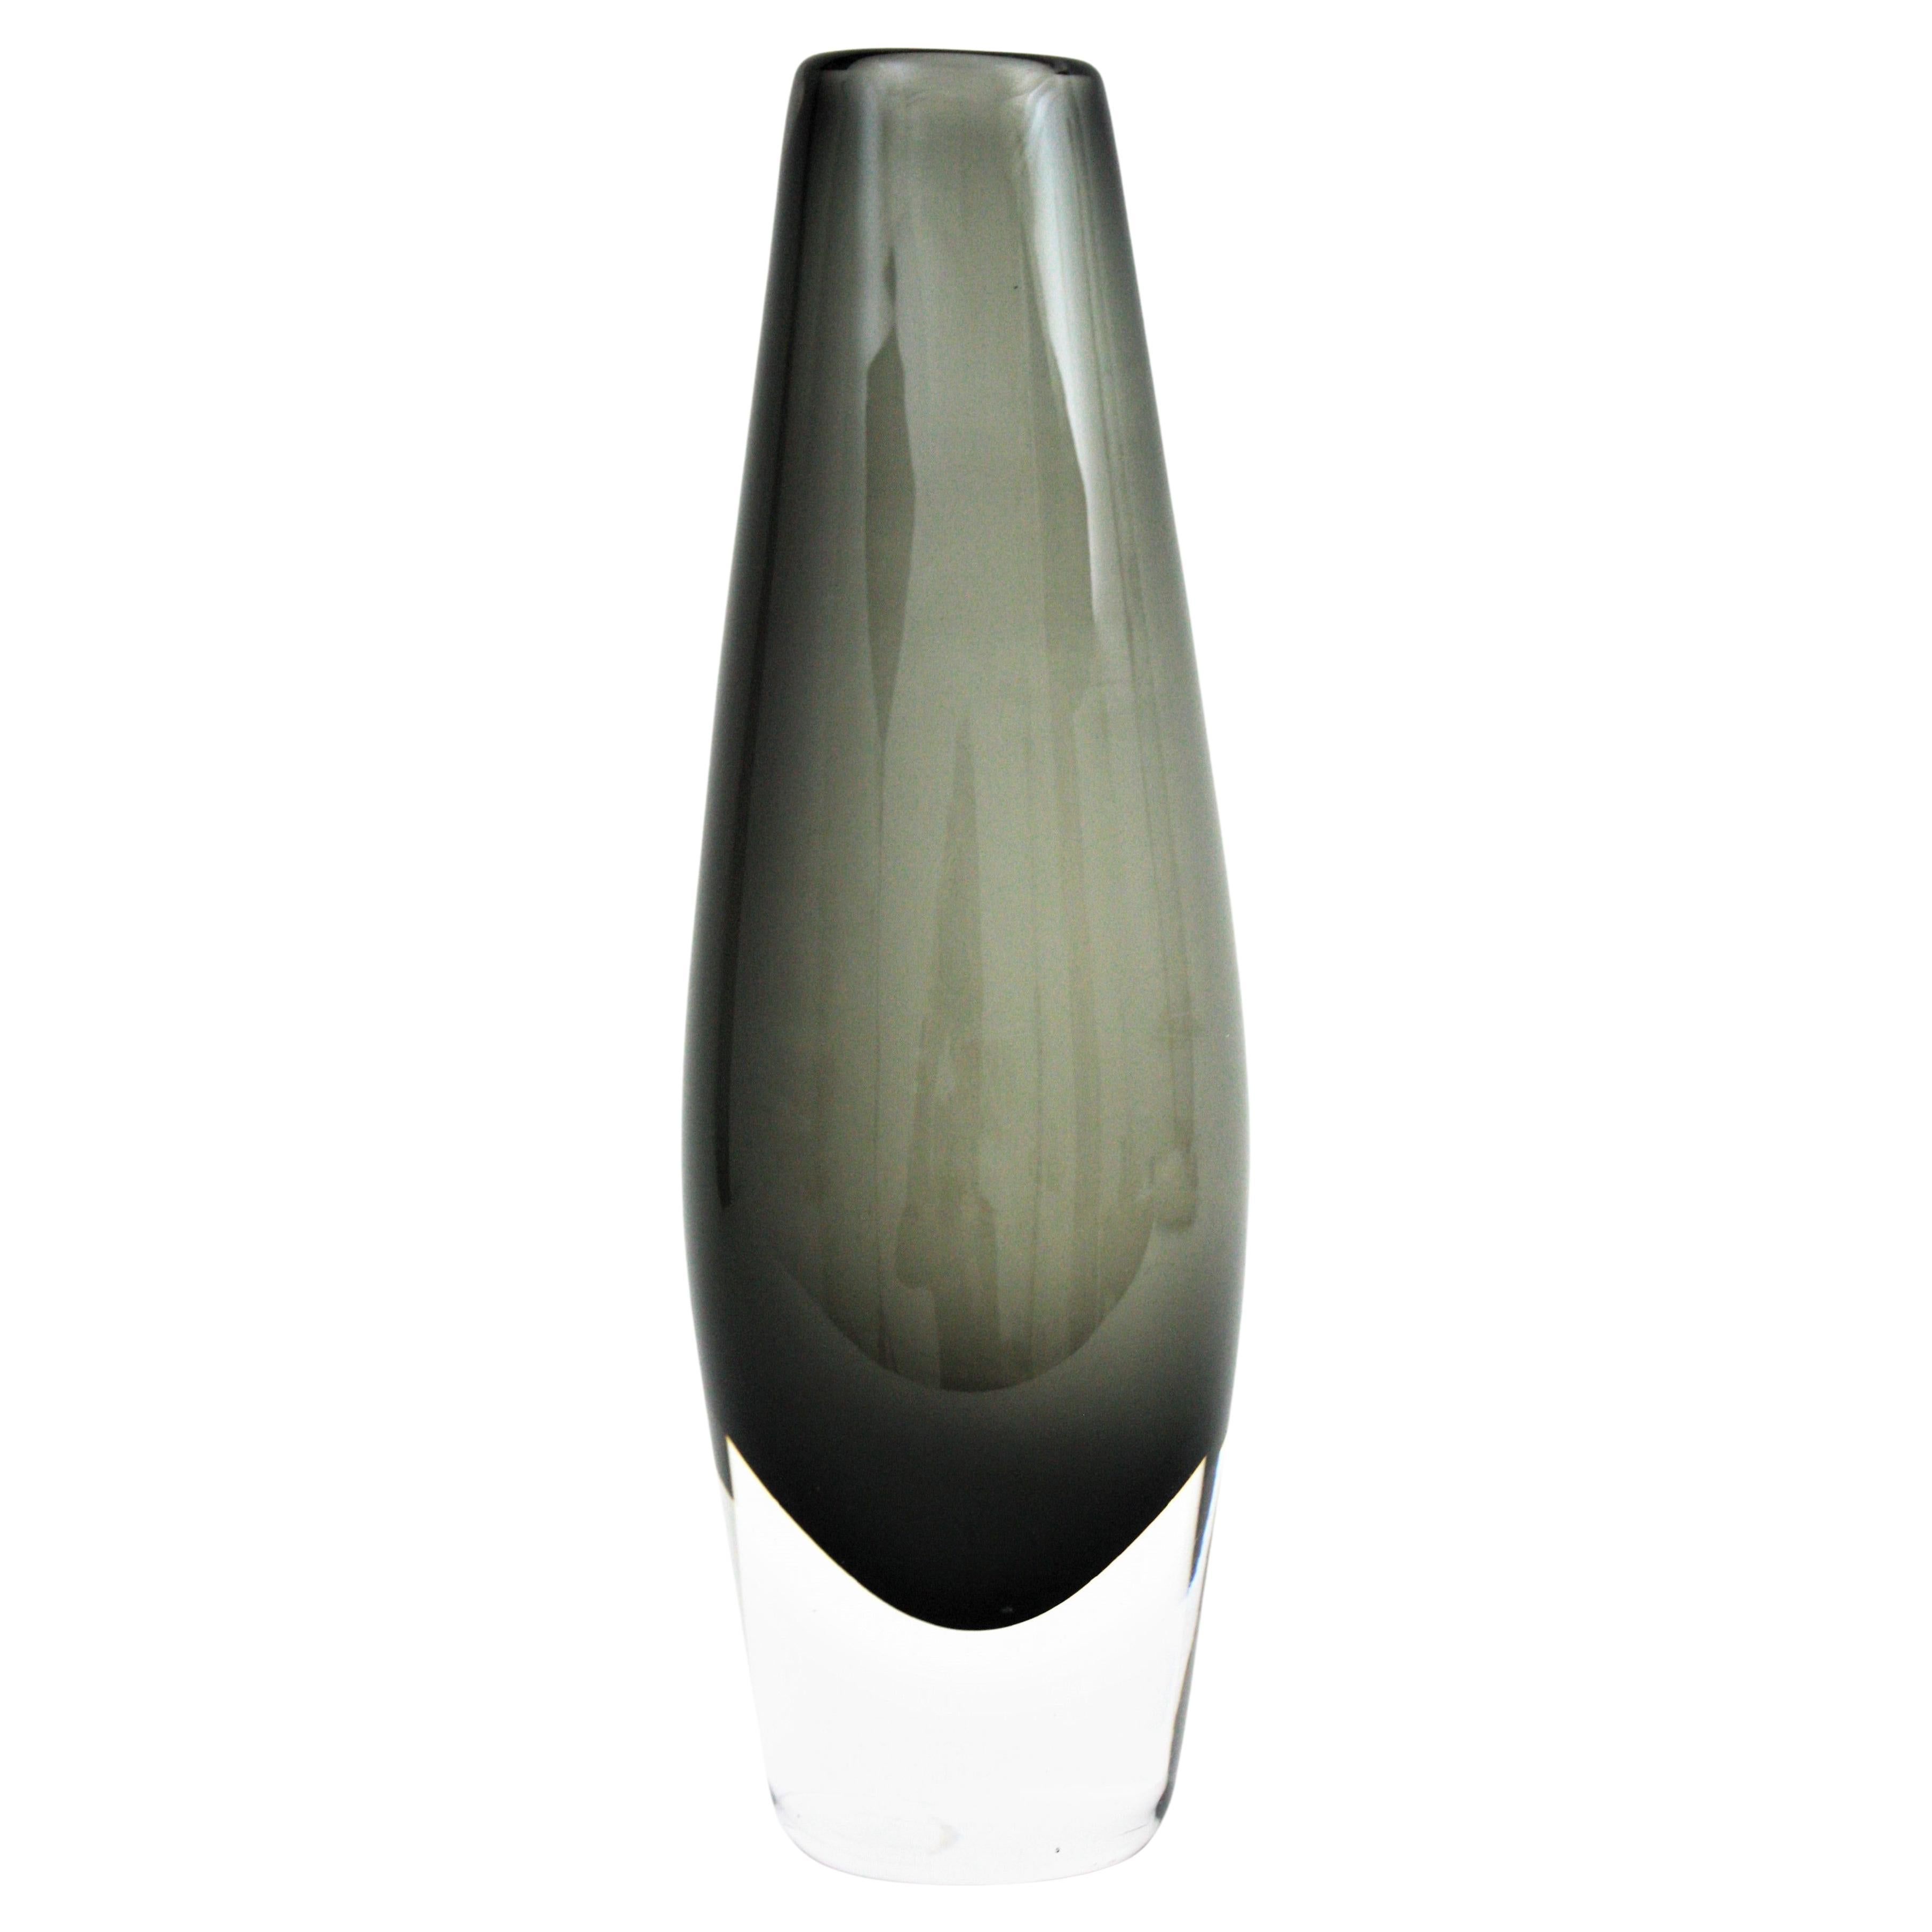 Nils Lamberg für Orrefors Sommerso, Vase aus grauem und klarem Glas